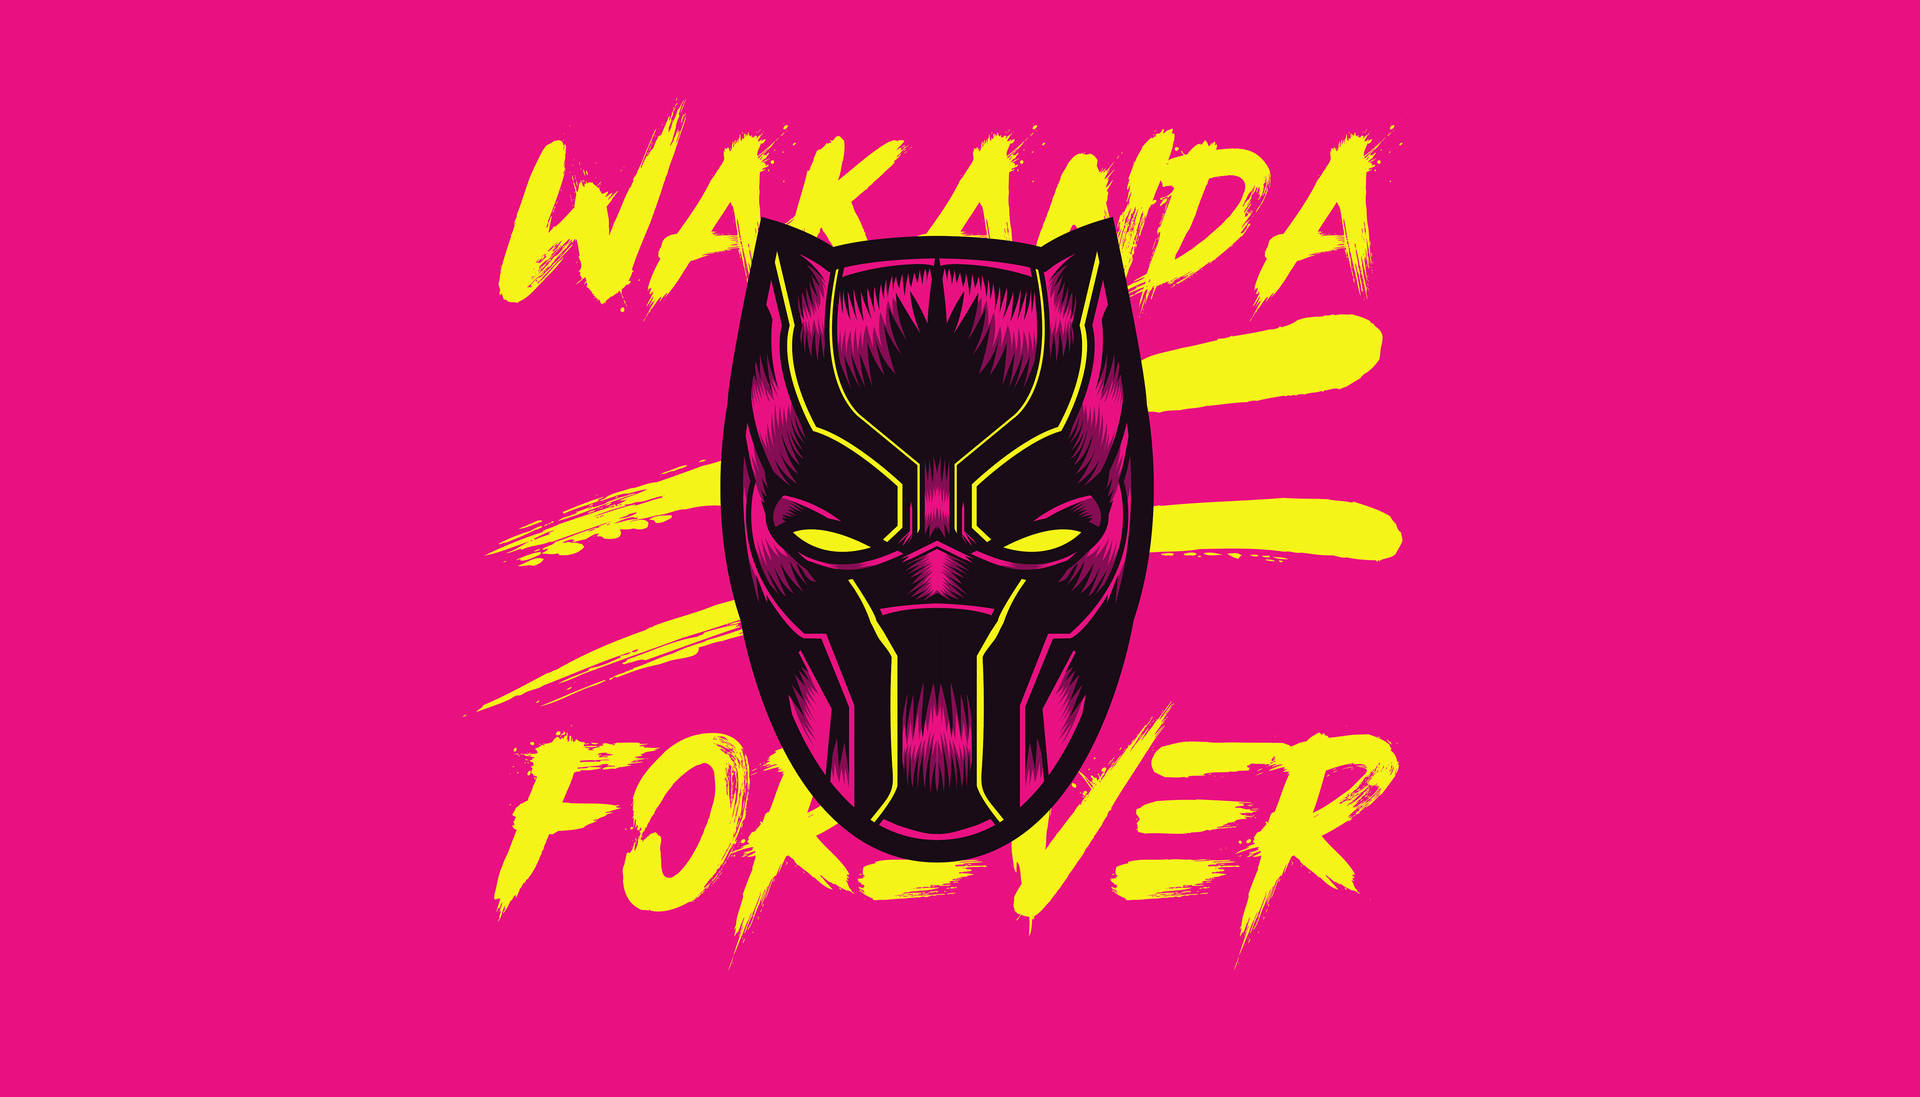 Top 999+ Wakanda Forever Wallpaper Full HD, 4K✅Free to Use